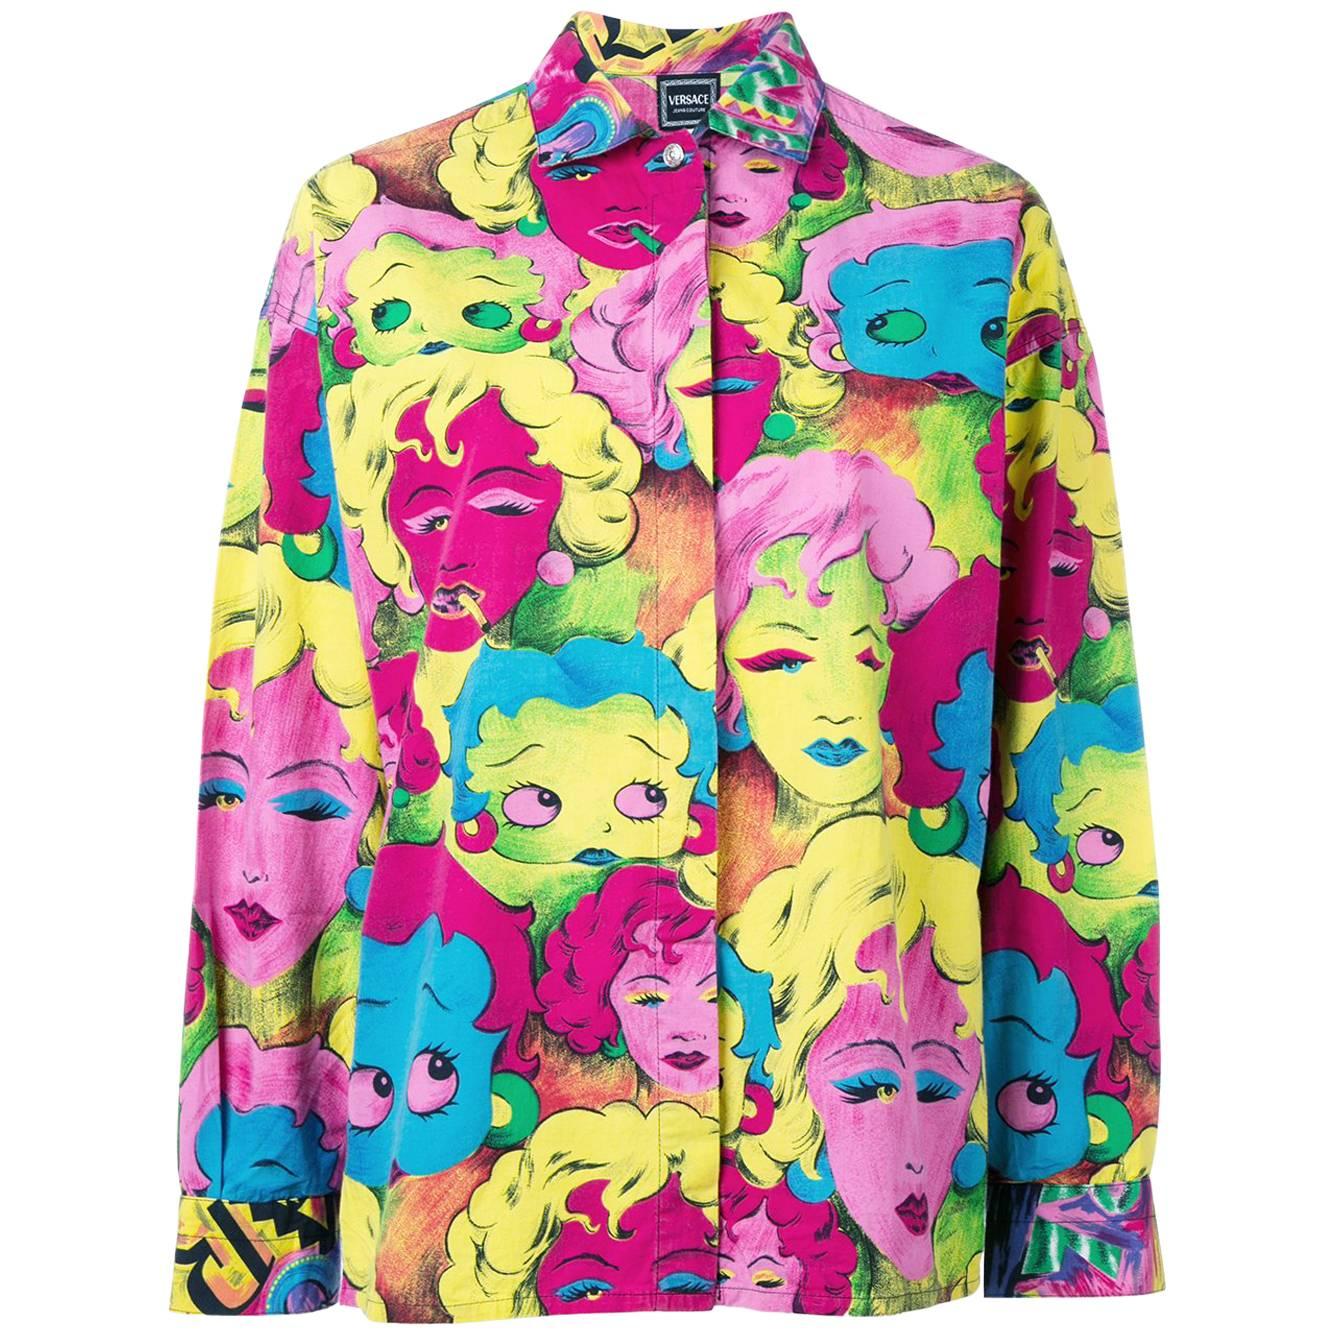 1991 GIANNI VERSACE Pop Art Marilyn Betty Boop shirt For Sale